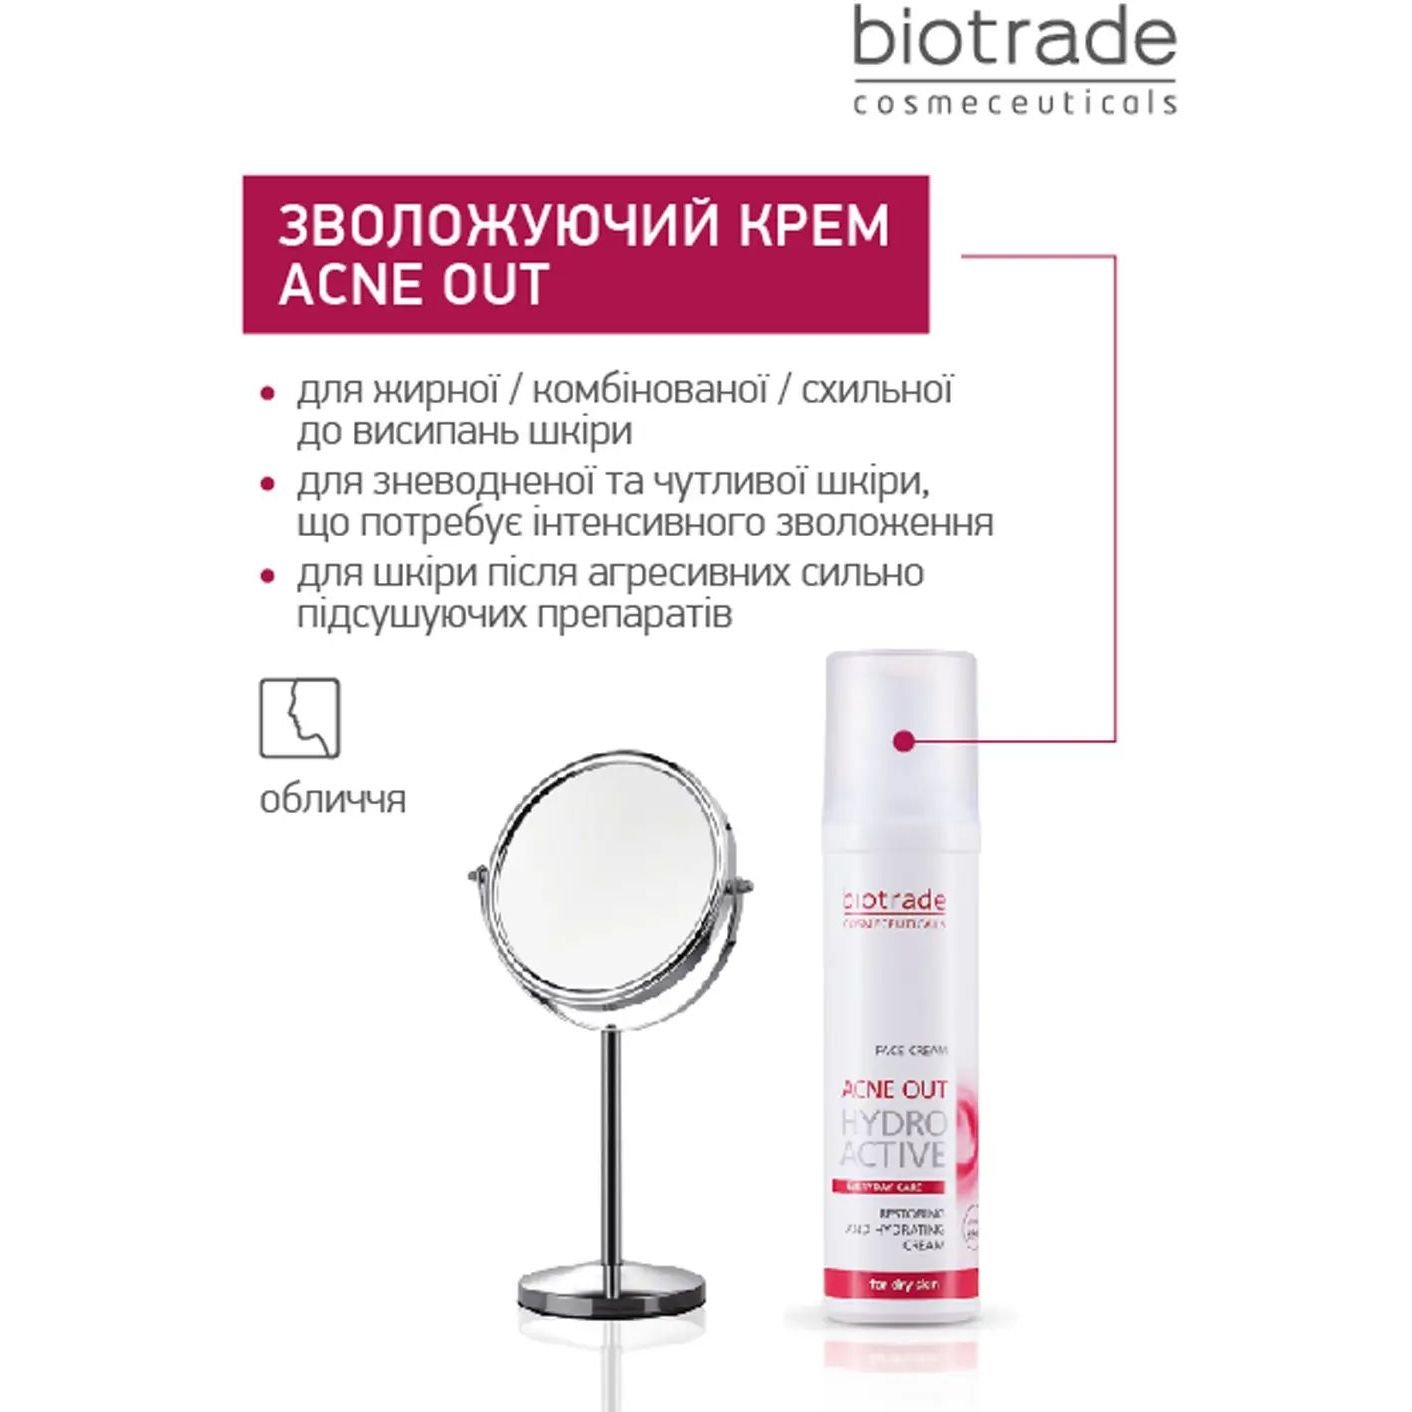 Увлажняющий крем для лица Biotrade Biotrade Acne Out Hydro Active 60 мл (3800221840396) - фото 2